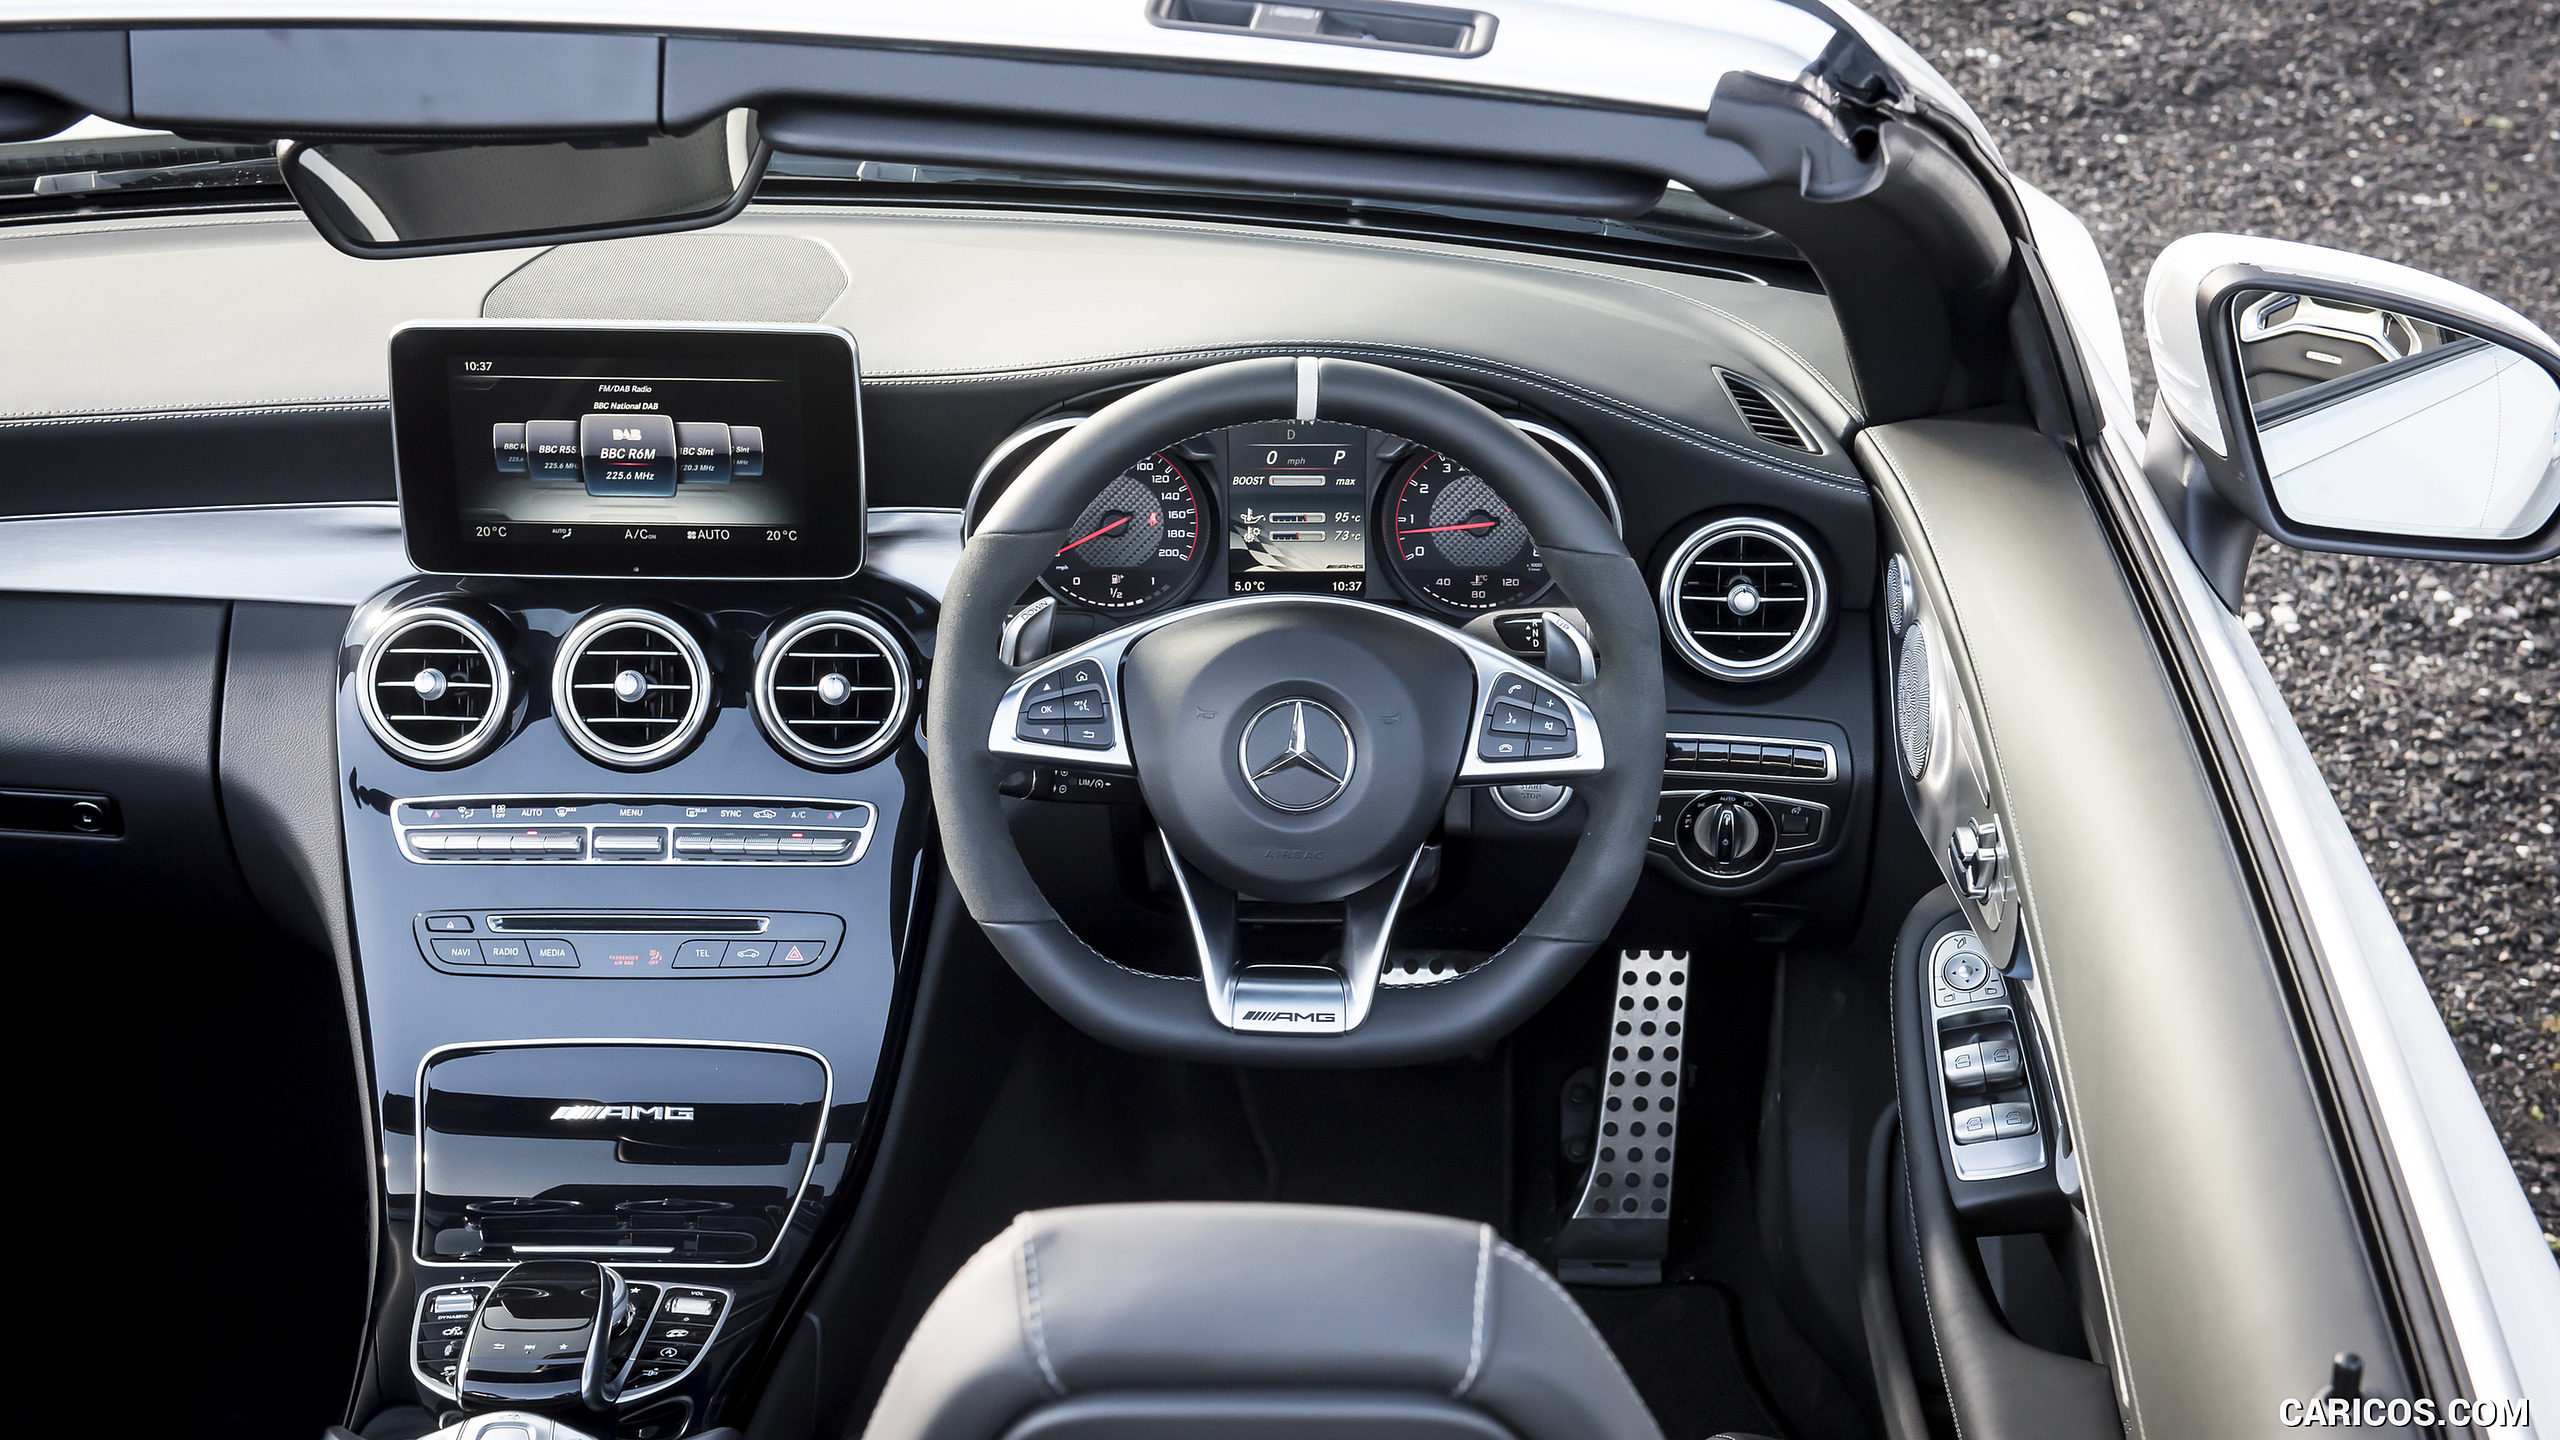 2017 Mercedes-AMG C63 S Cabriolet (UK-Spec) - Interior, Cockpit, #46 of 50